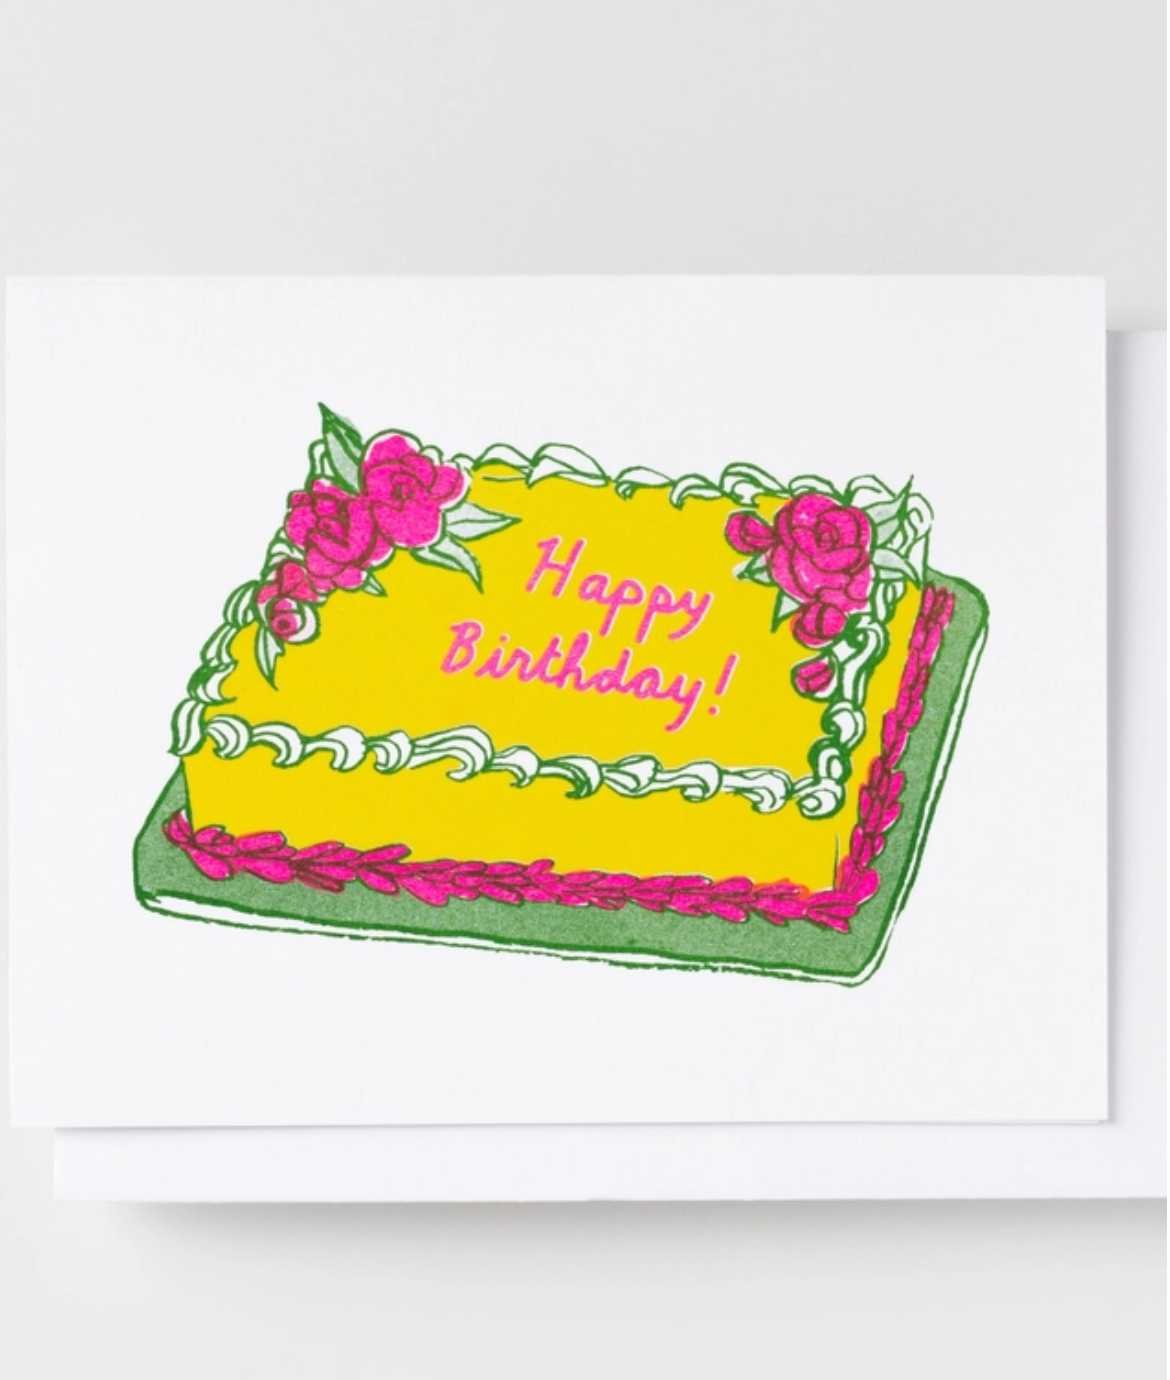 Happy Birthday Cake Card Floret + Foliage Floret + Foliage